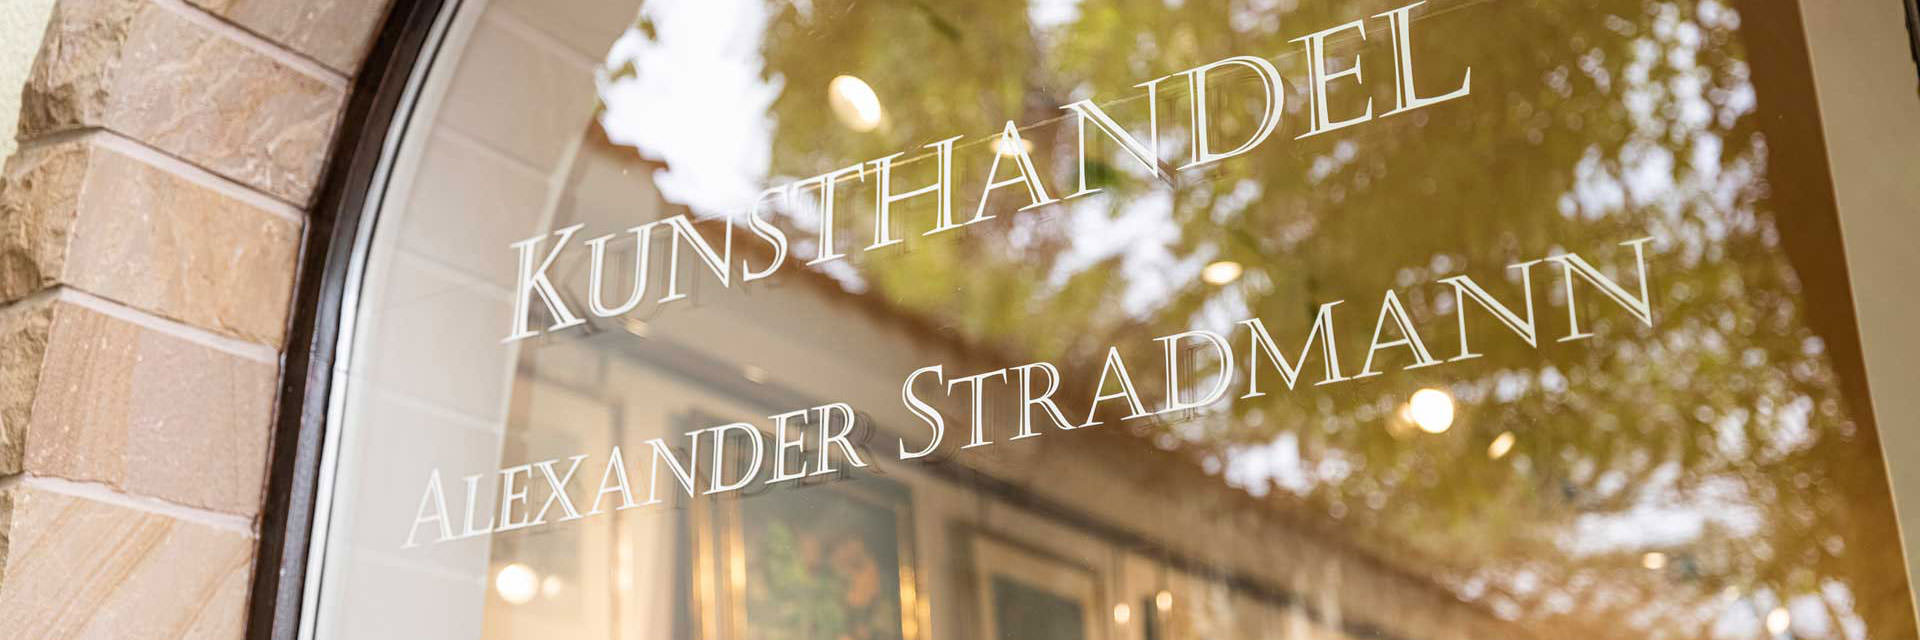 Kunsthandel Alexander Stradmann